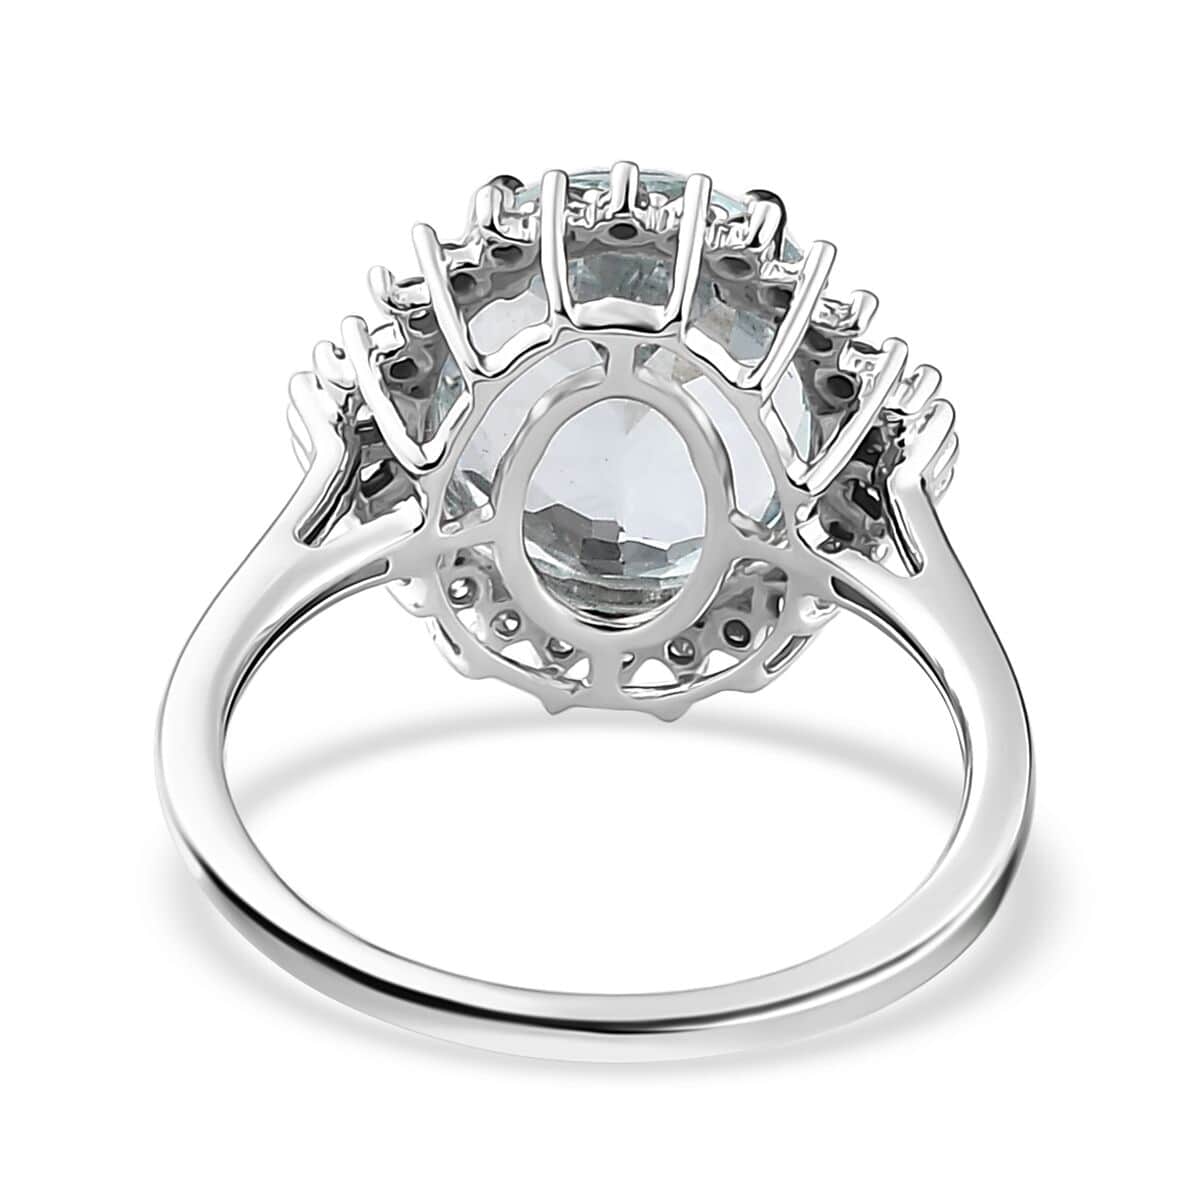 Luxoro 10K White Gold Premium Mangoro Aquamarine, Diamond (0.30 cts) Halo Ring (Size 10.0) 4.40 ctw image number 4